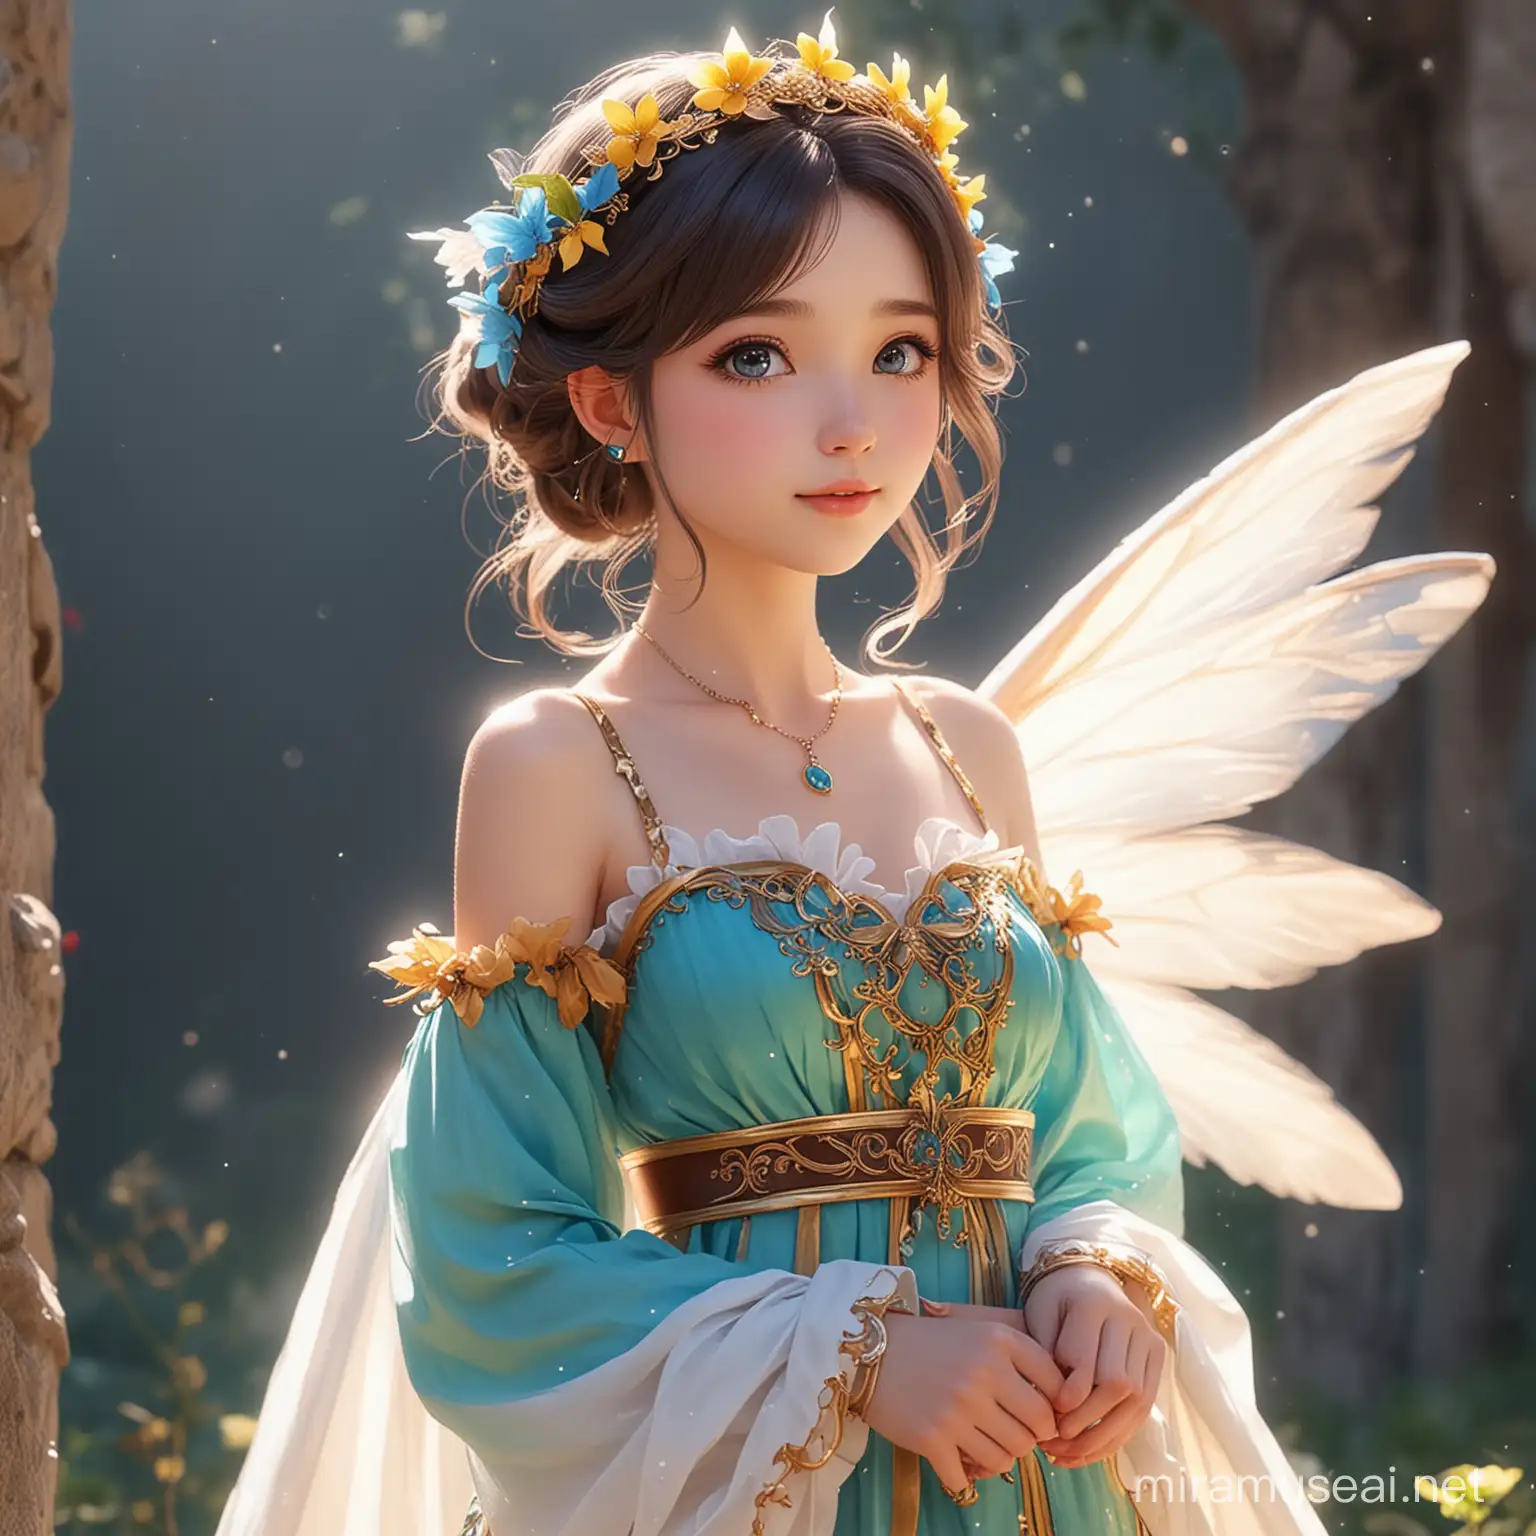 Enchanting FairyLike Girl in Ancient Costume Gazing Upward